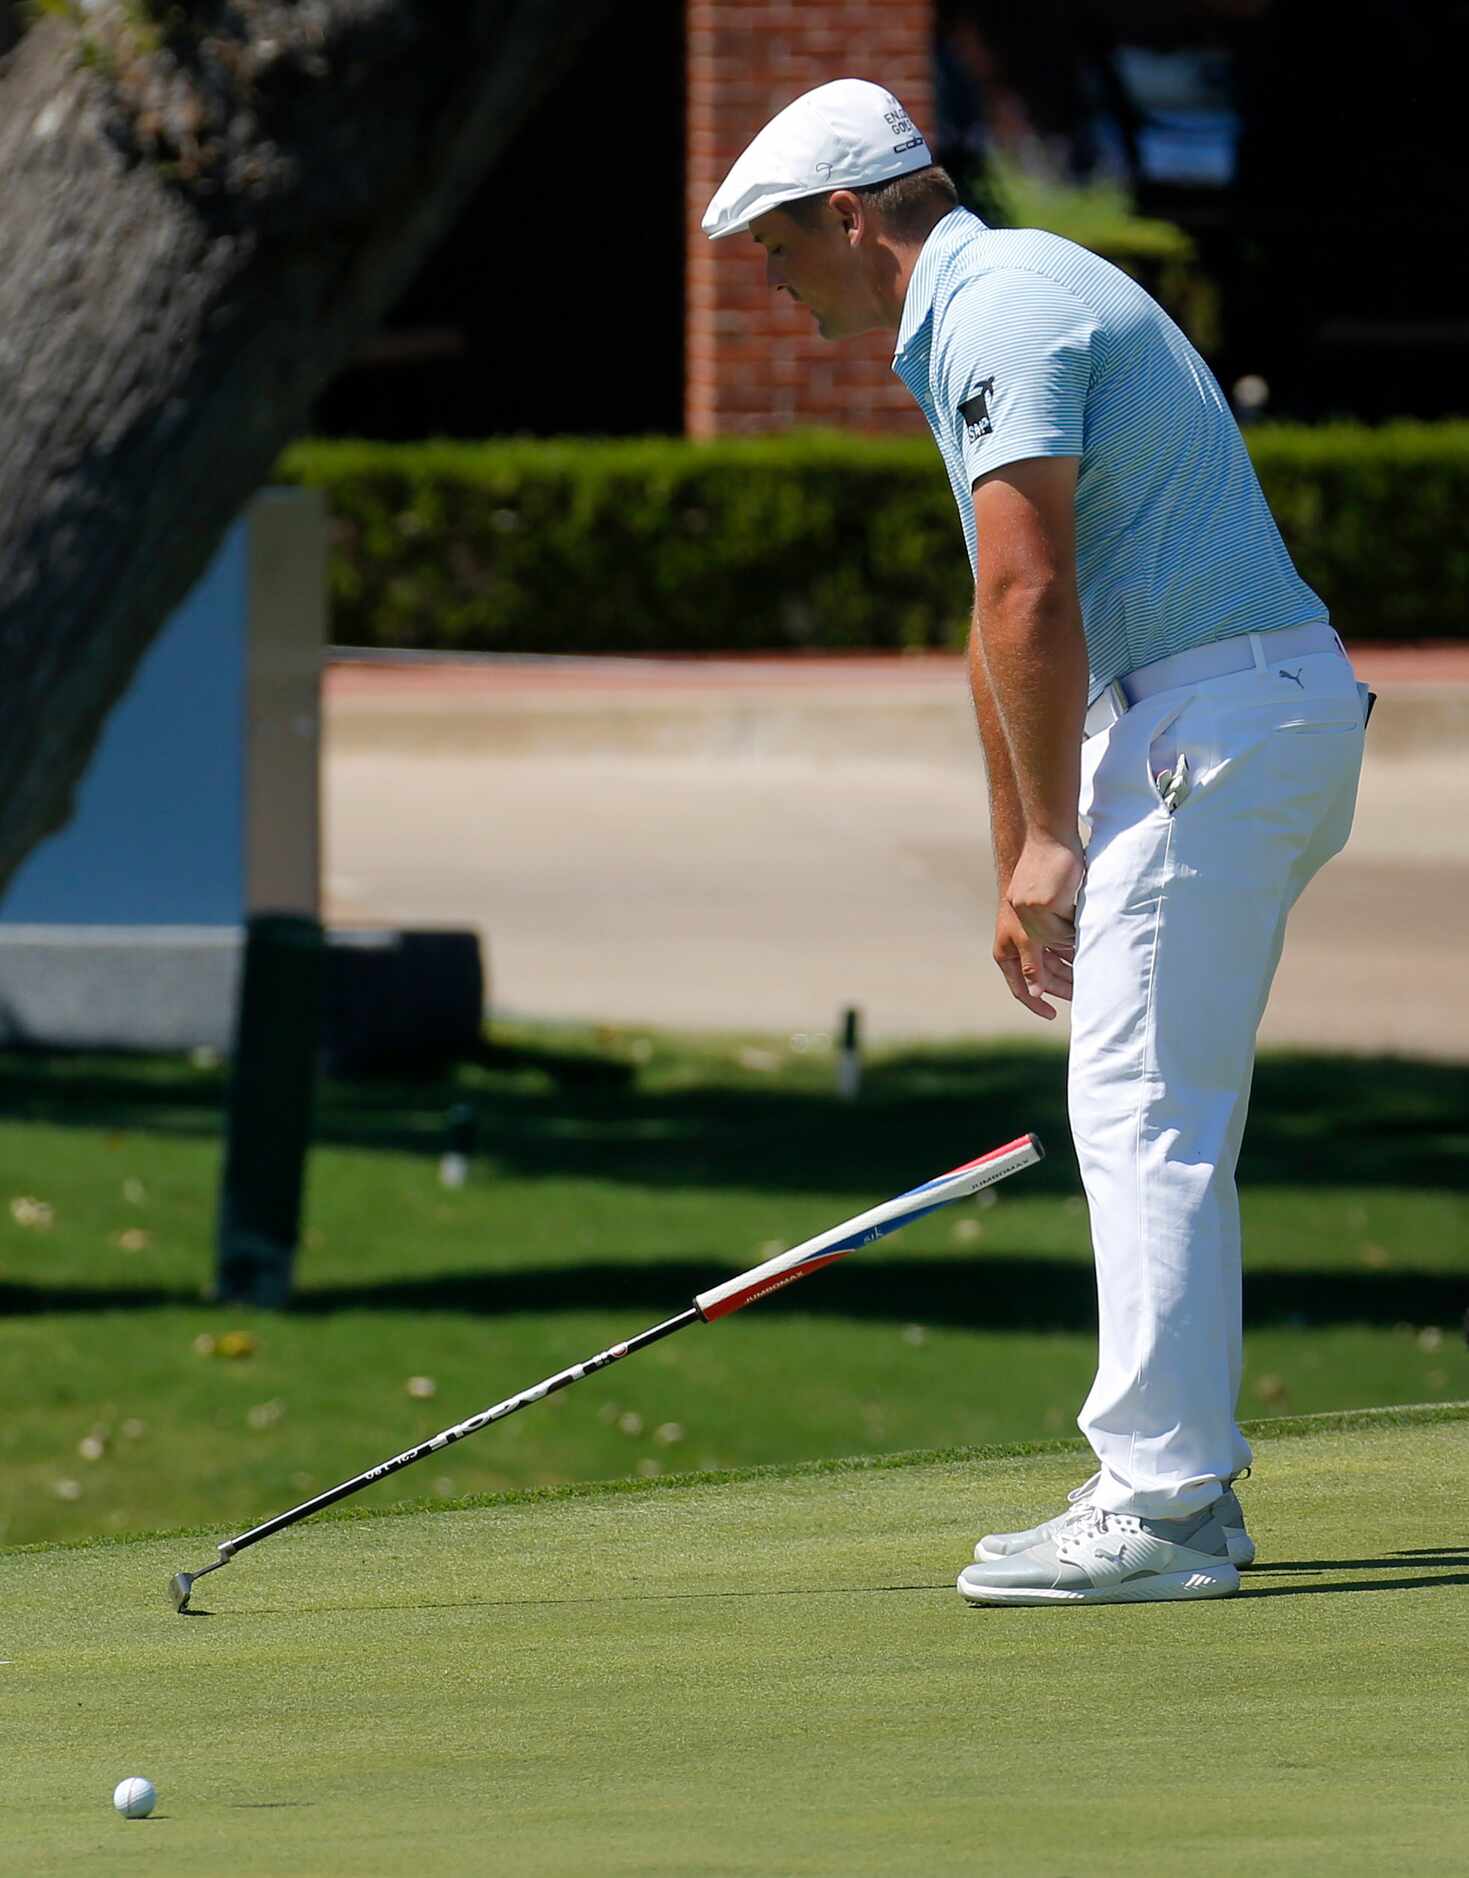 PGA Tour golfer Bryson DeChambeau
drops his putter as he misses a birdie putt on No. 18...